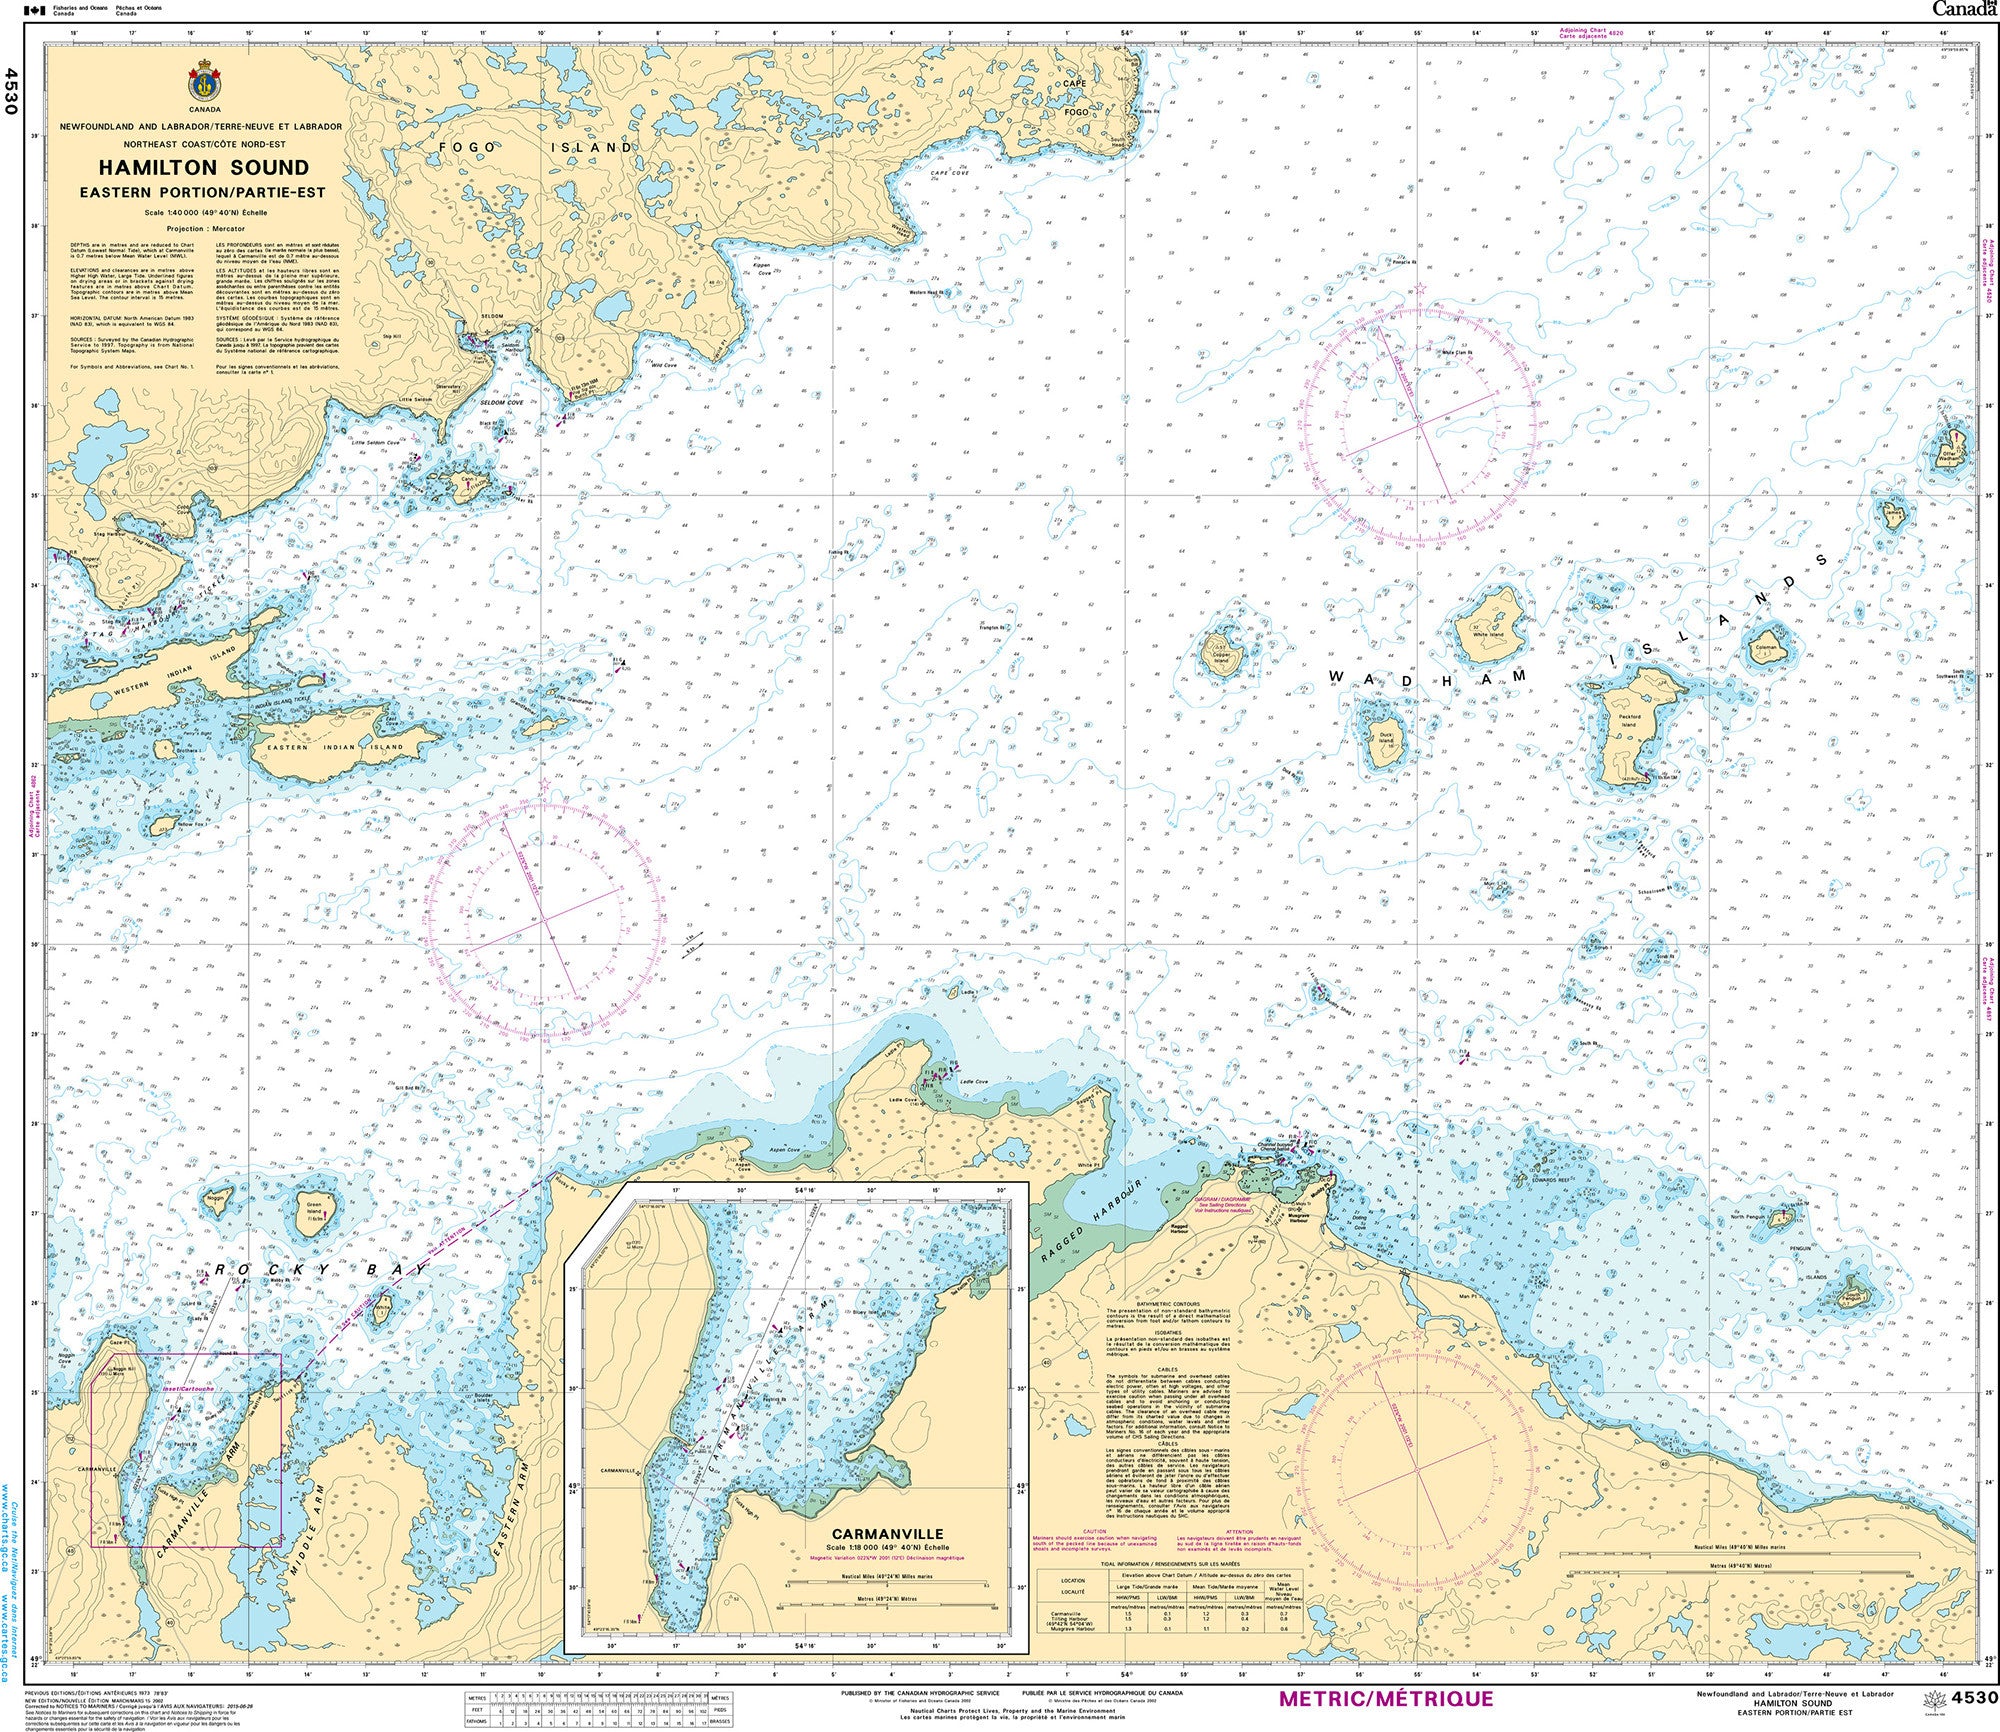 Canadian Hydrographic Service Nautical Chart CHS4530: Hamilton Sound, Eastern Portion / Partie est